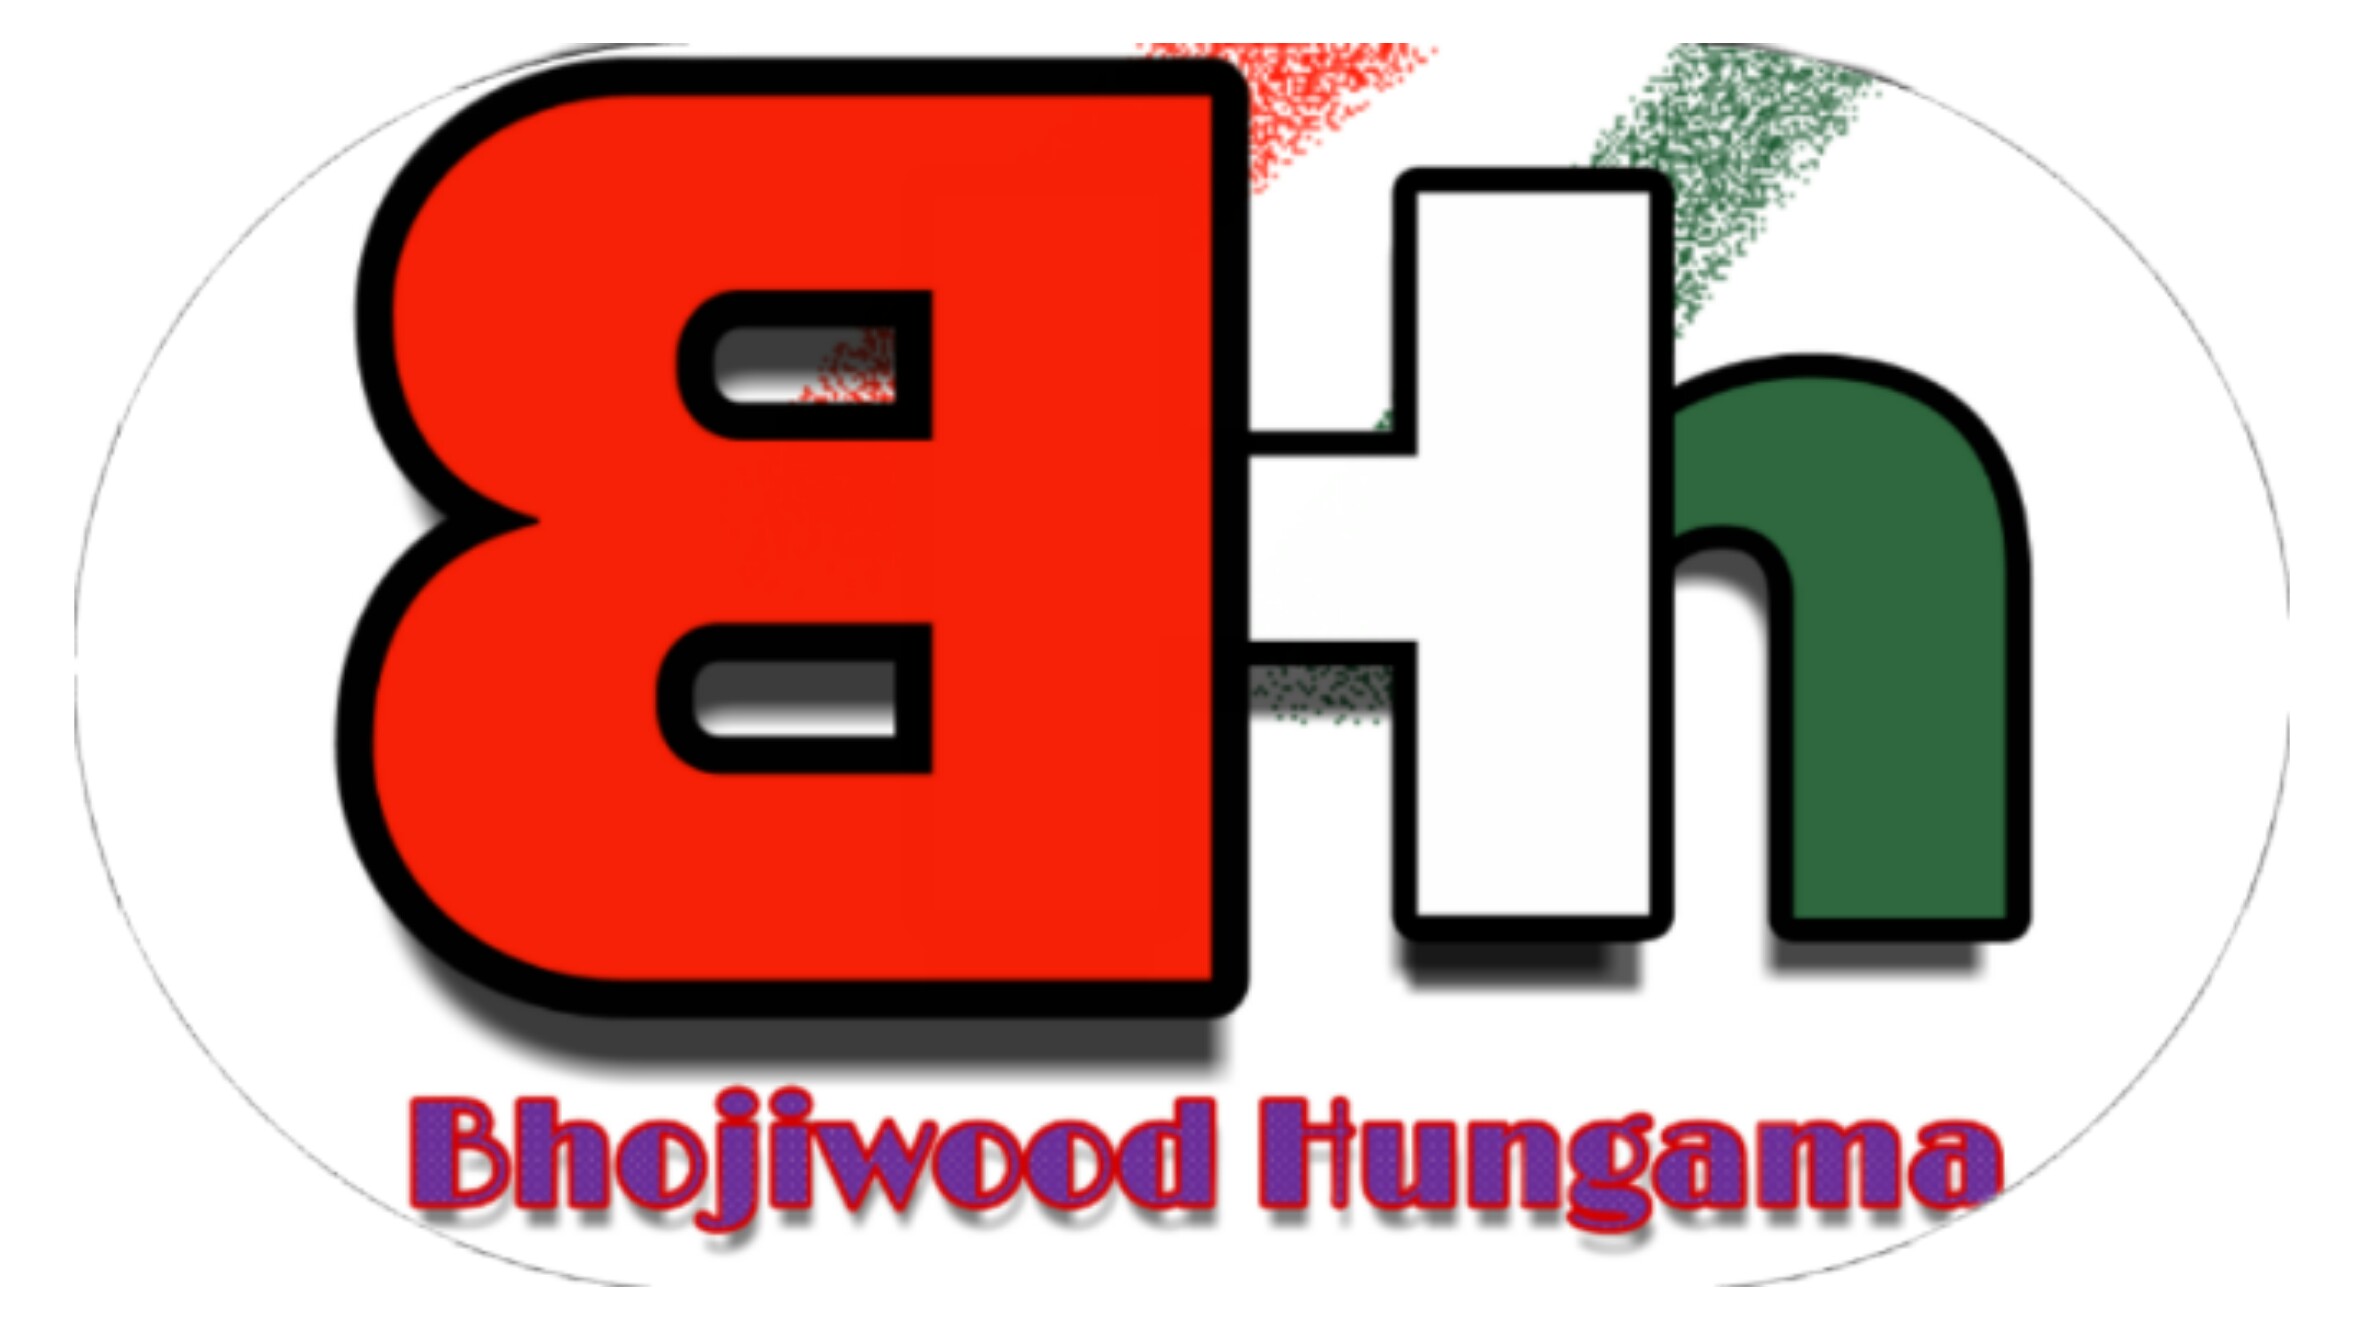 Bhojiwood Hungama